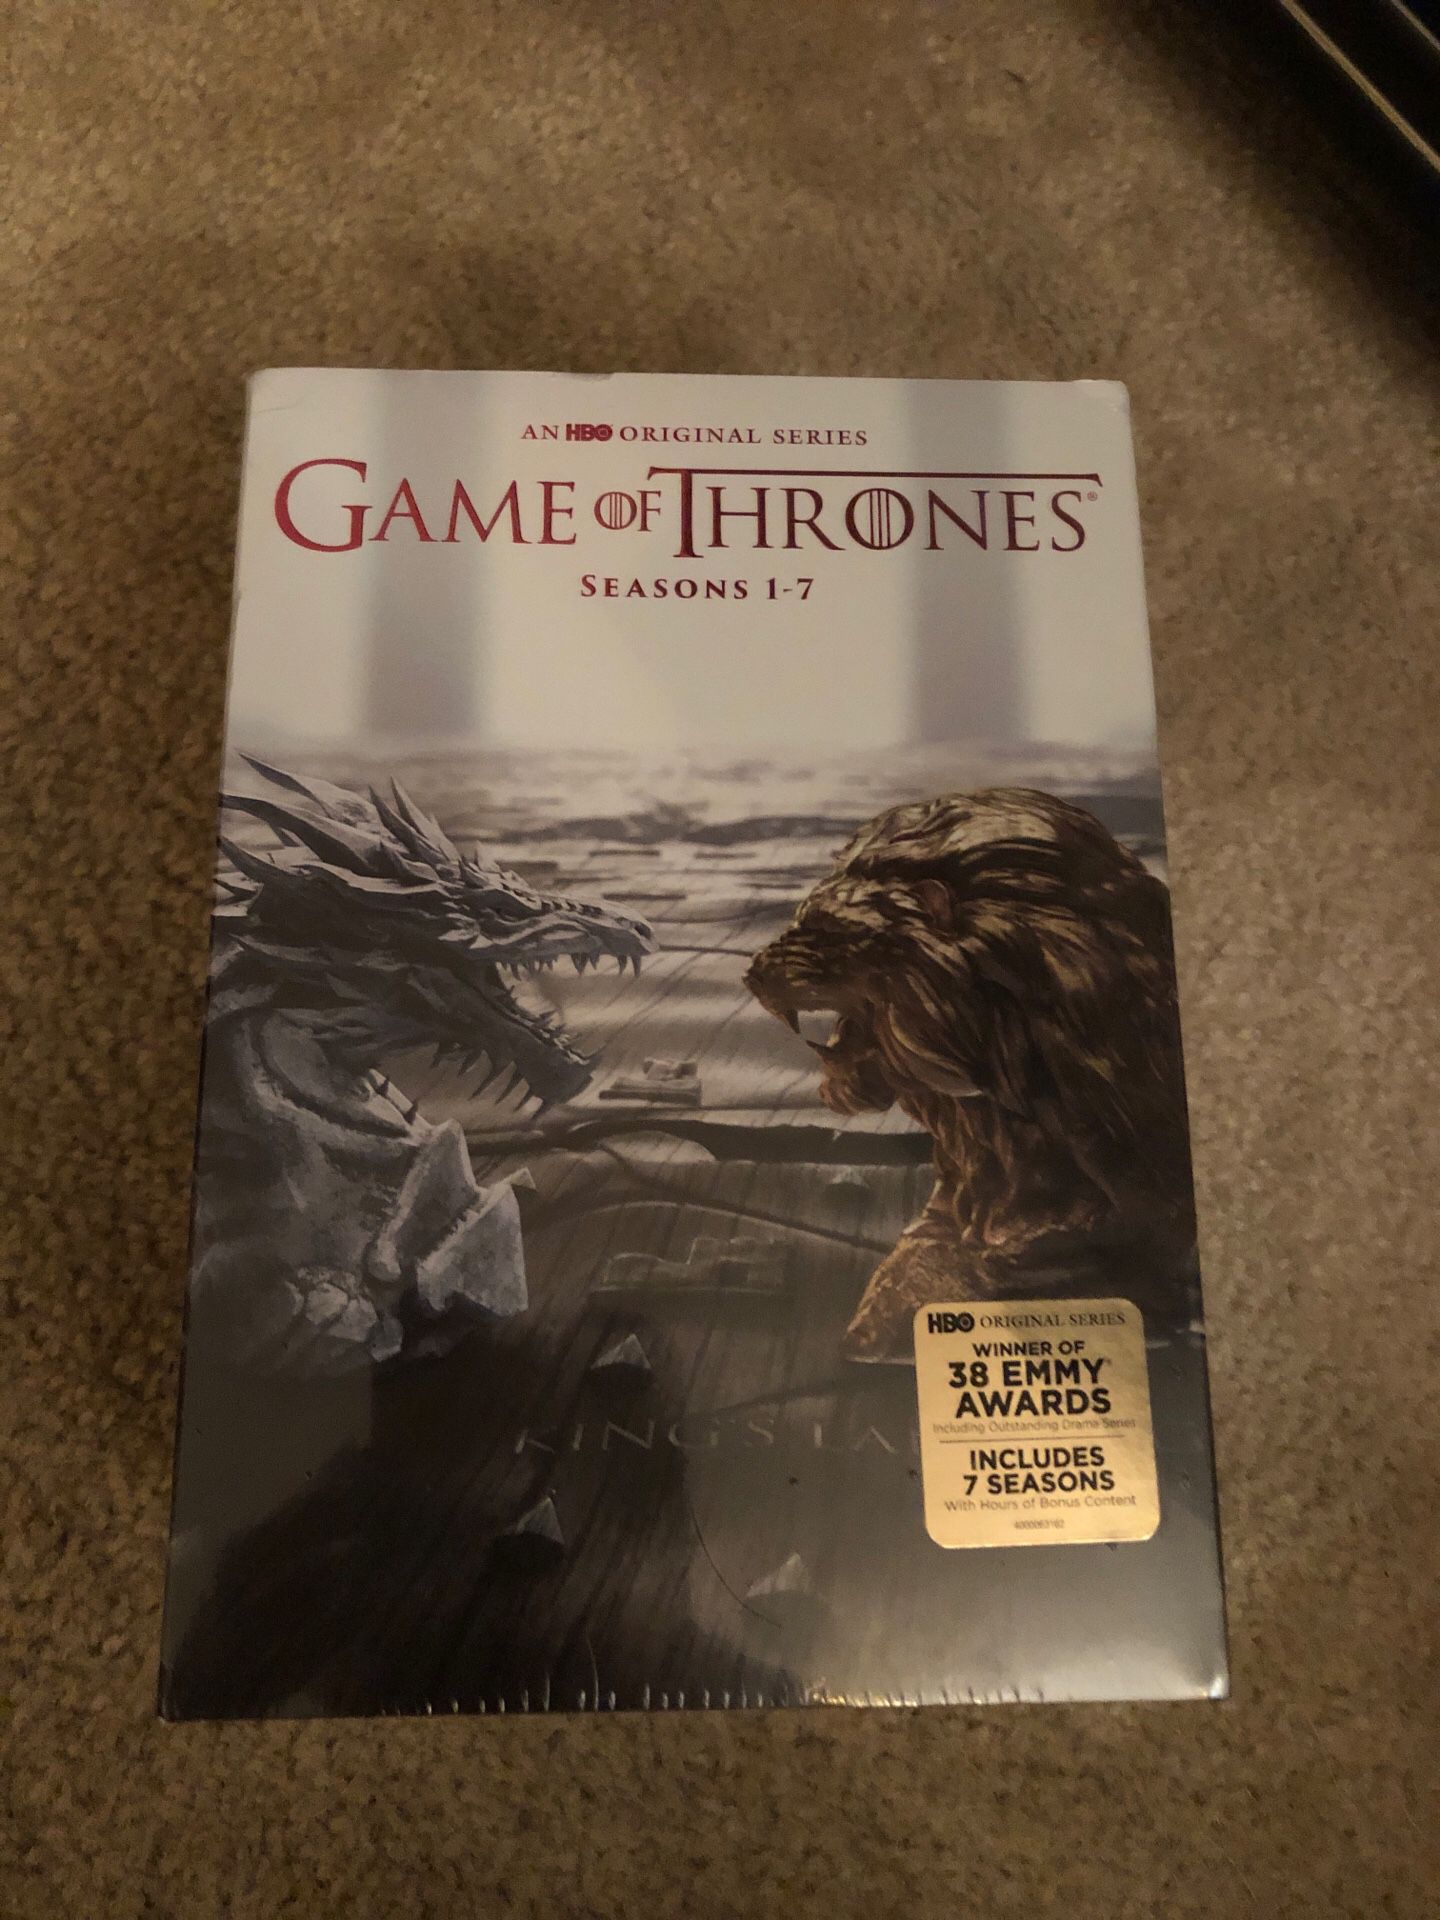 Game of thrones season 1-7 Box set (never open)